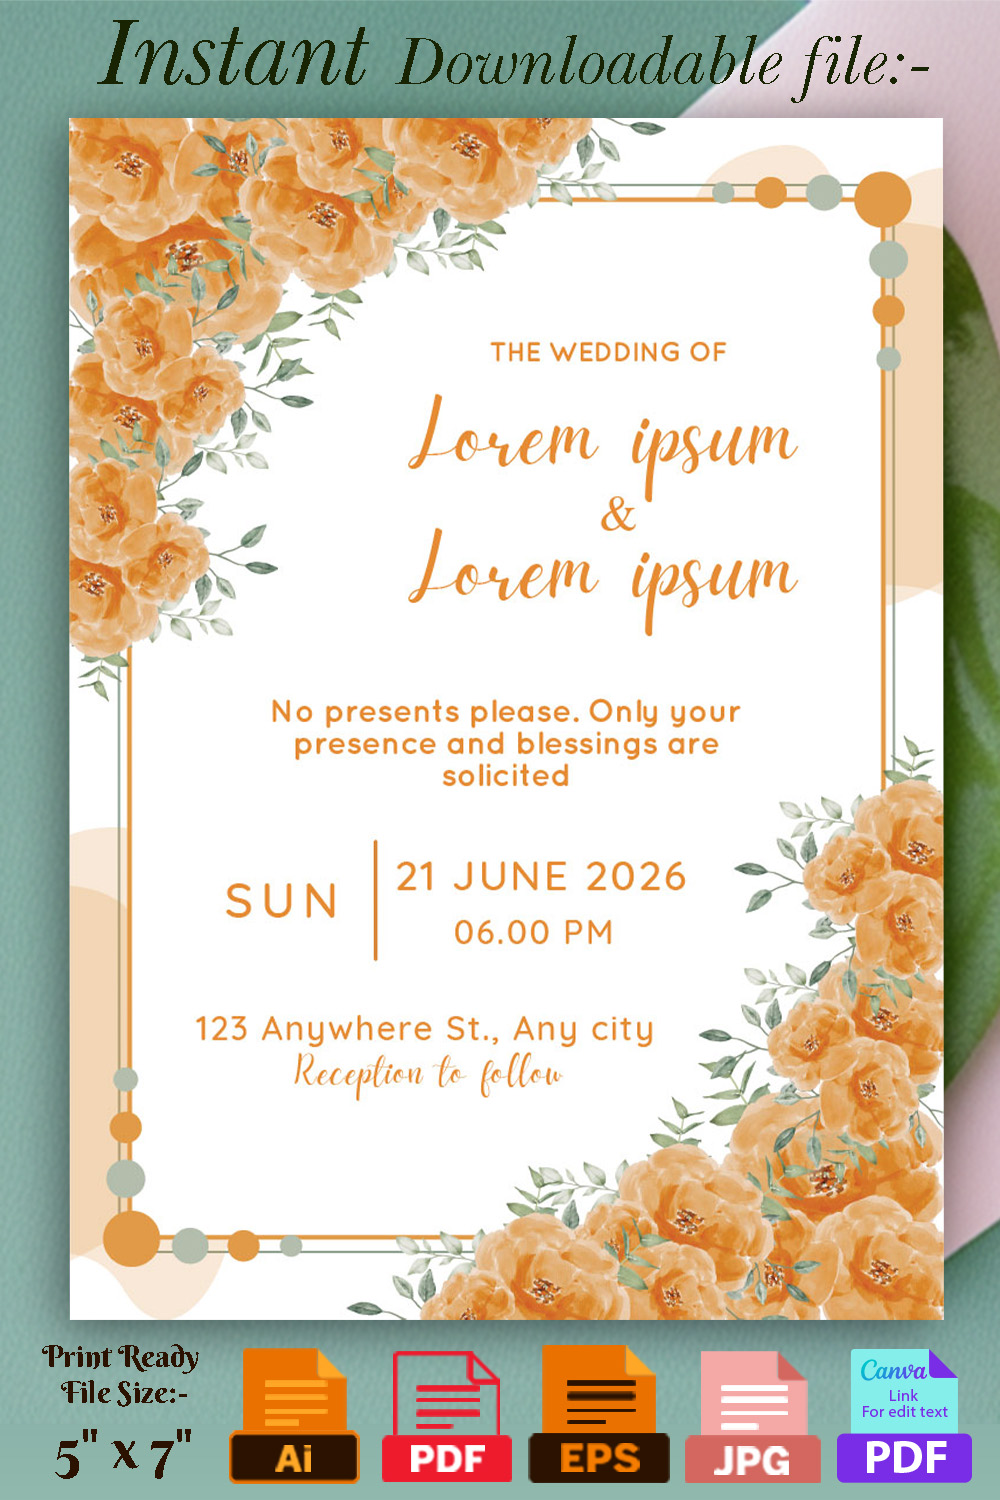 Image with amazing wedding invitation with roses frame.